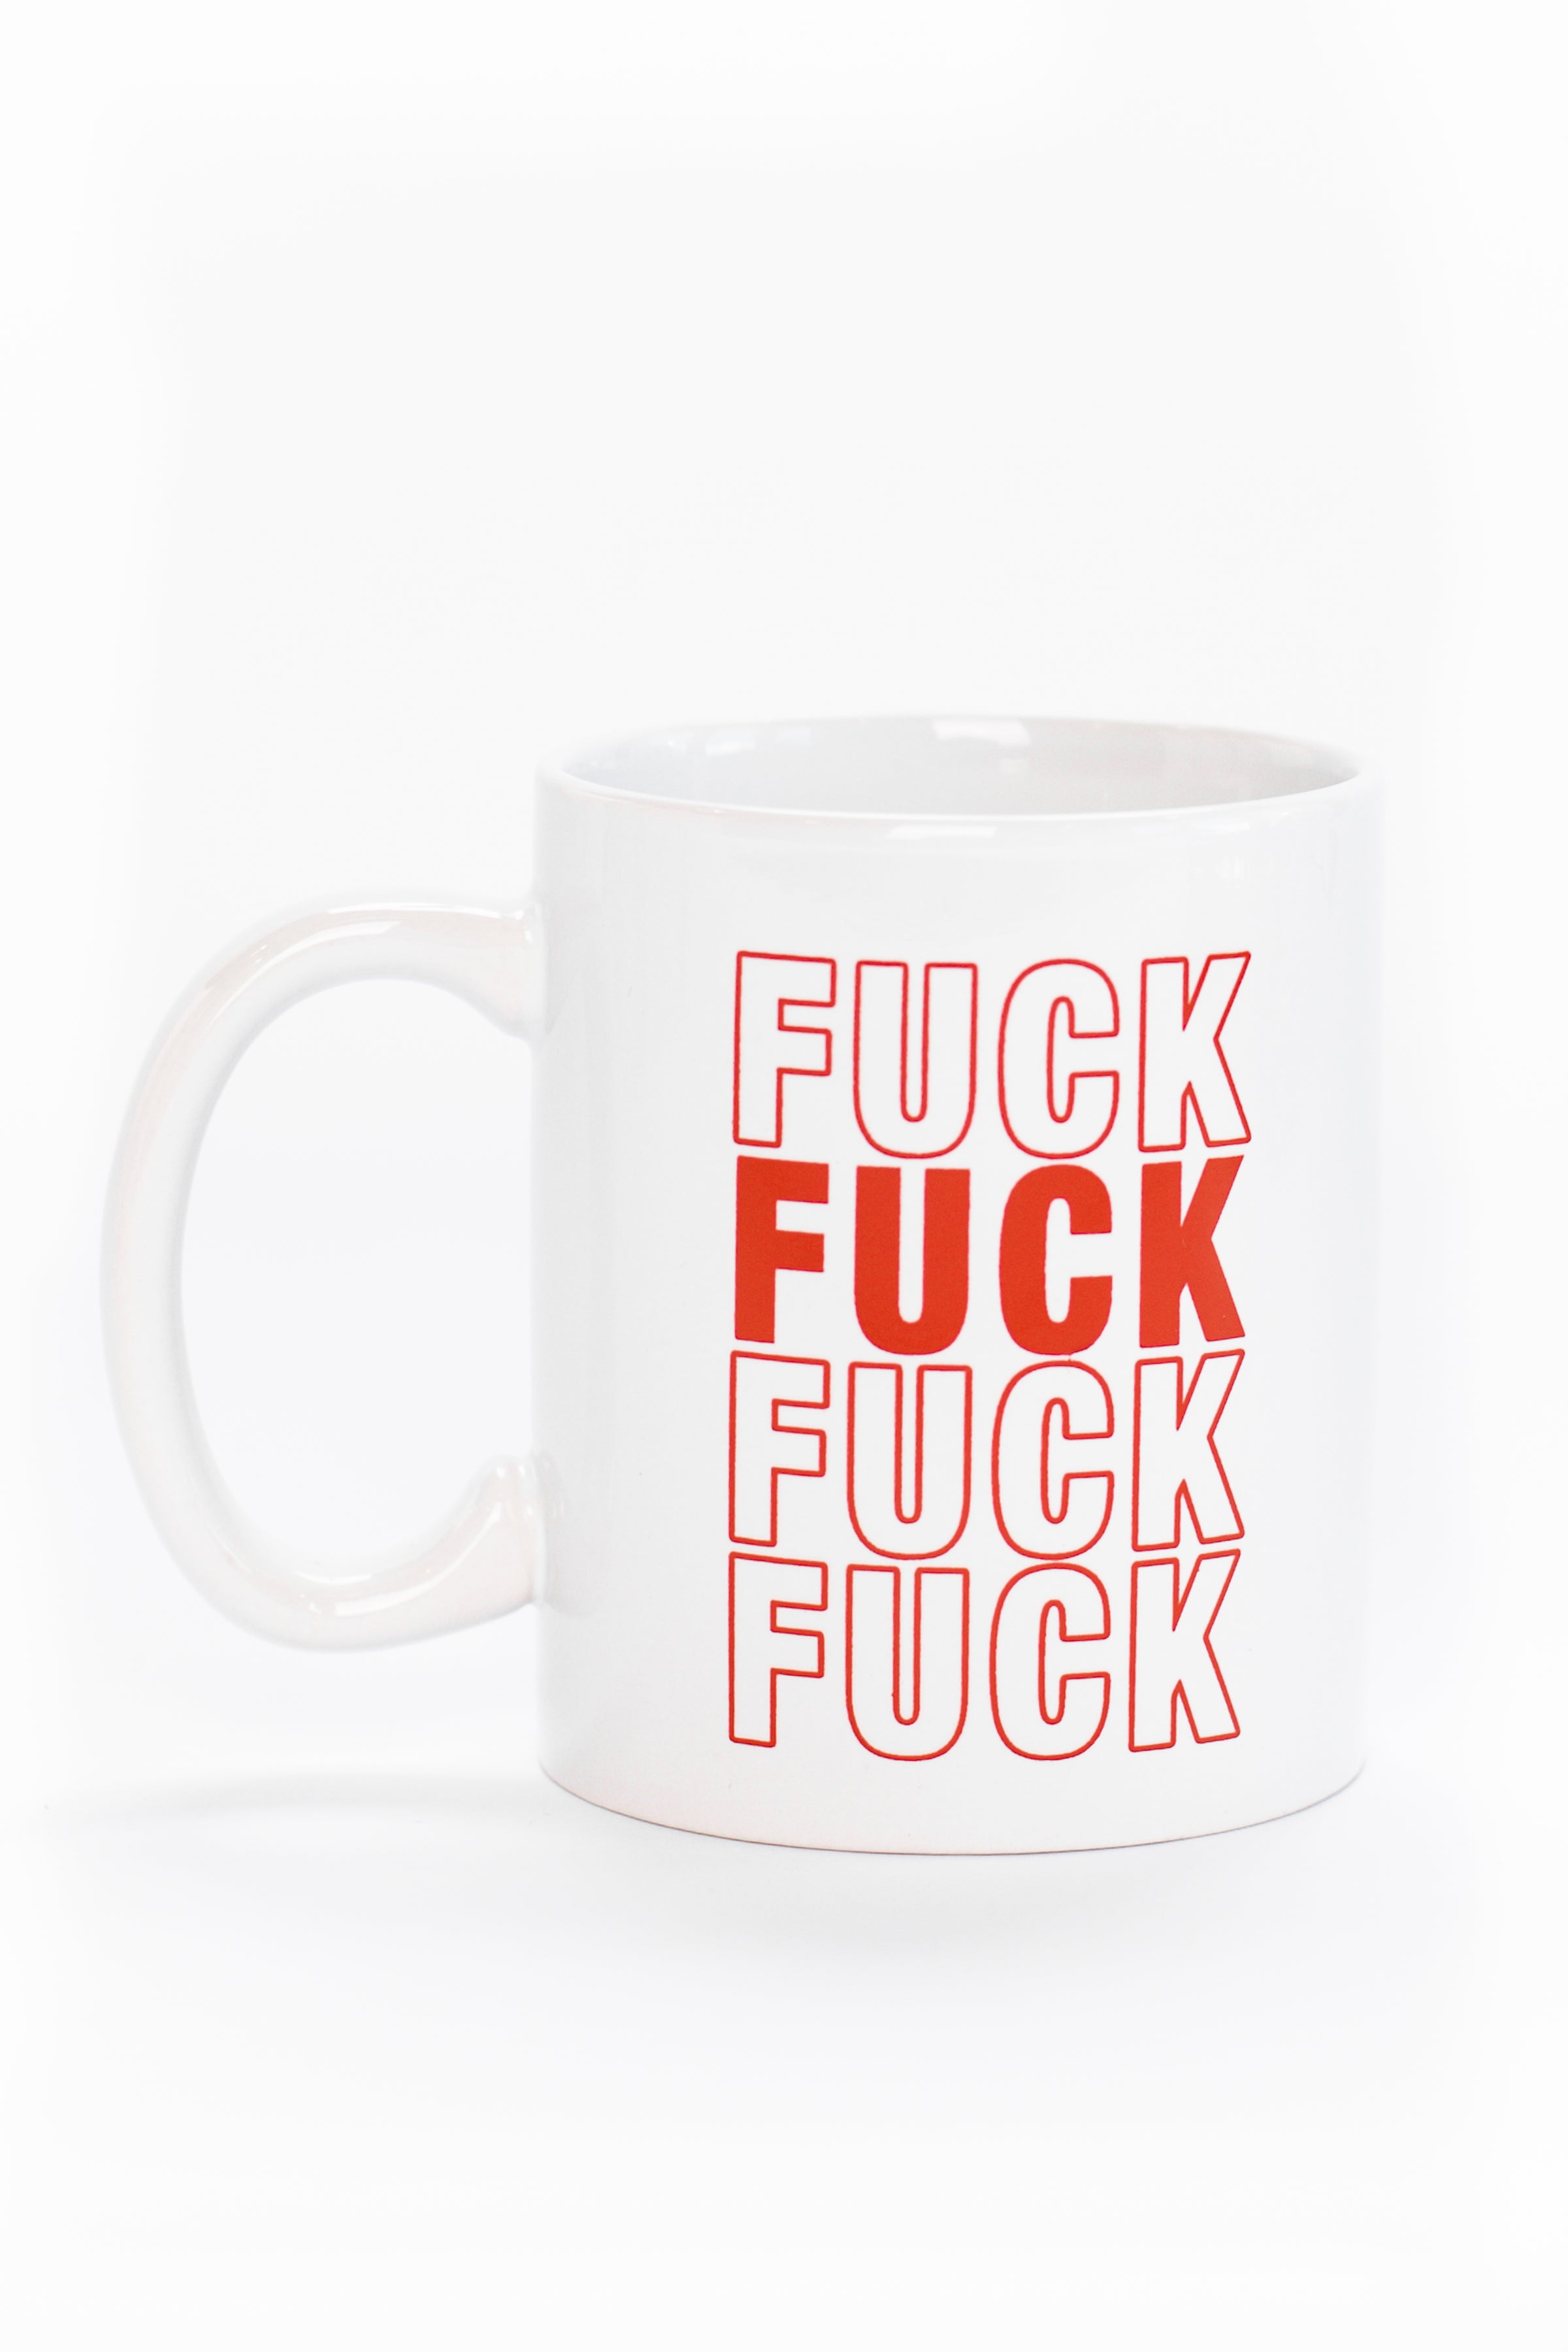 Fuck Mug by Brightside